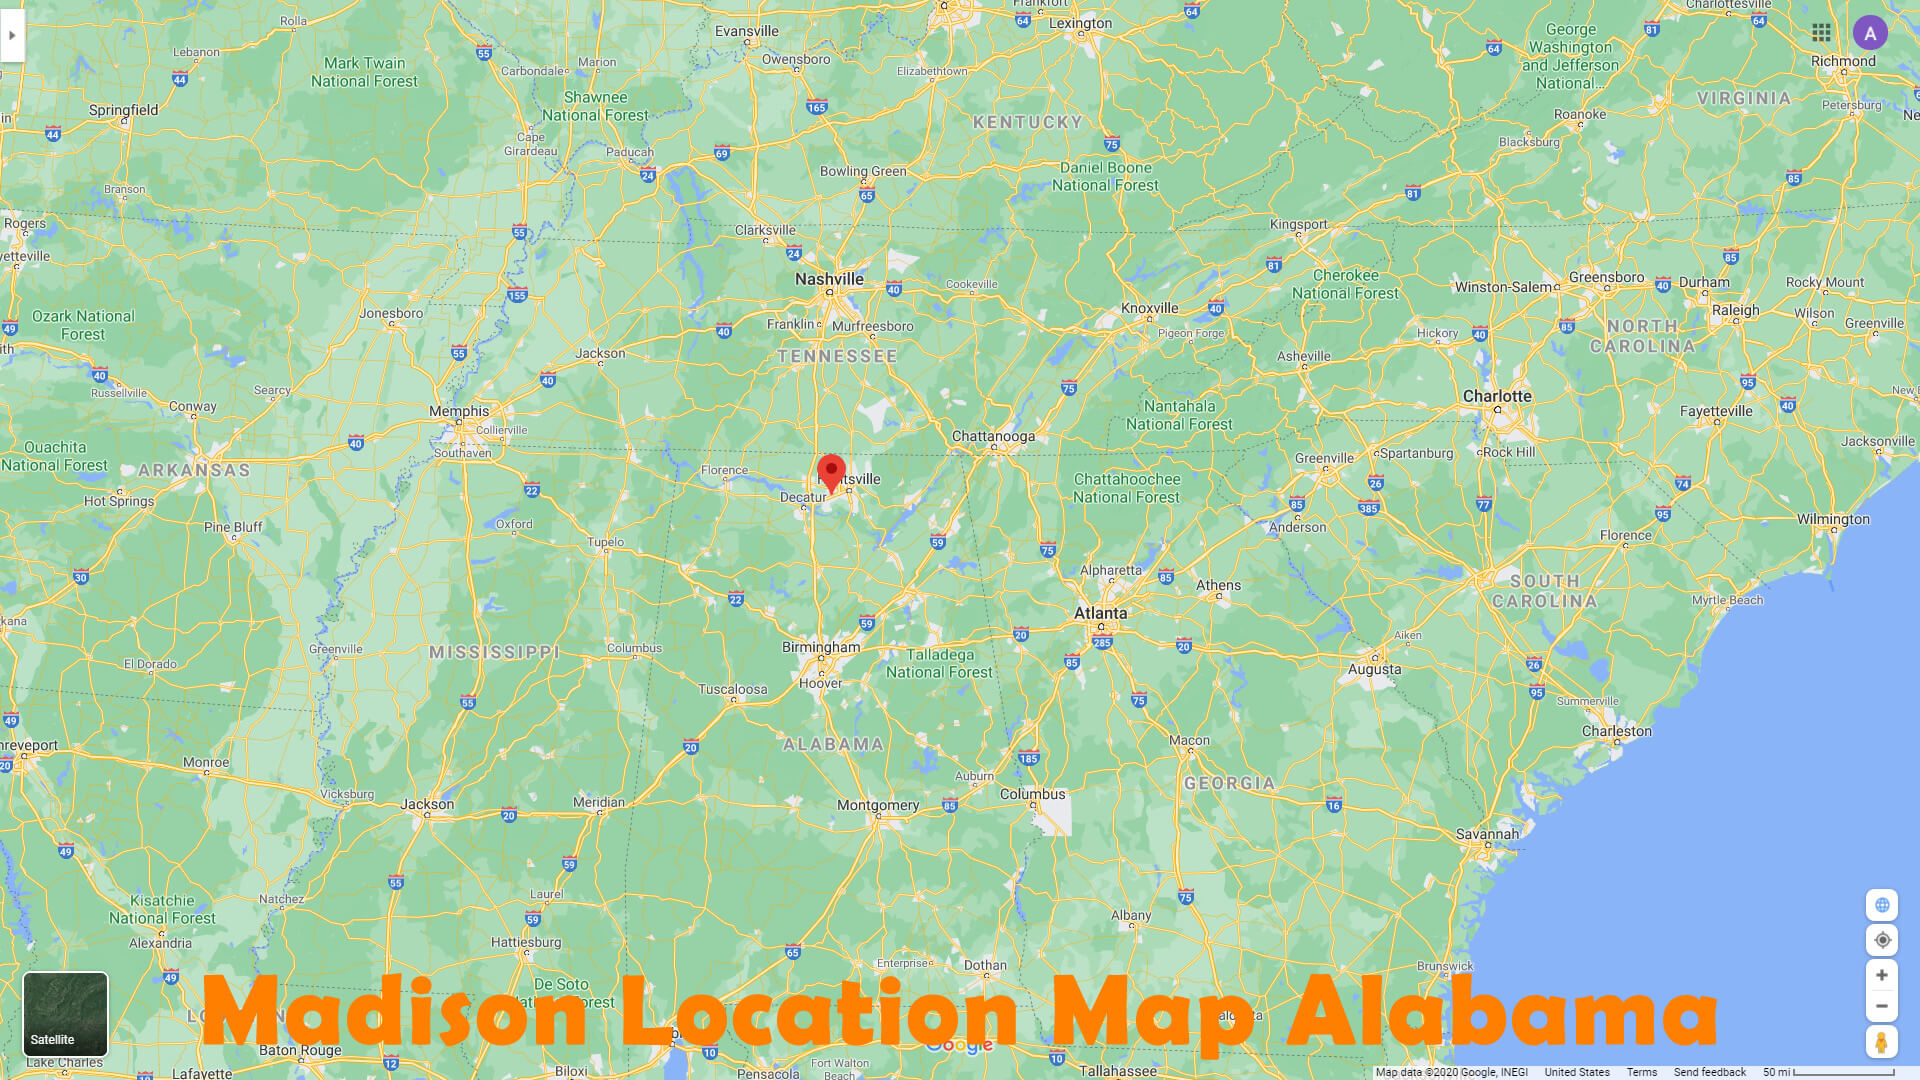 Madison Location Map Alabama